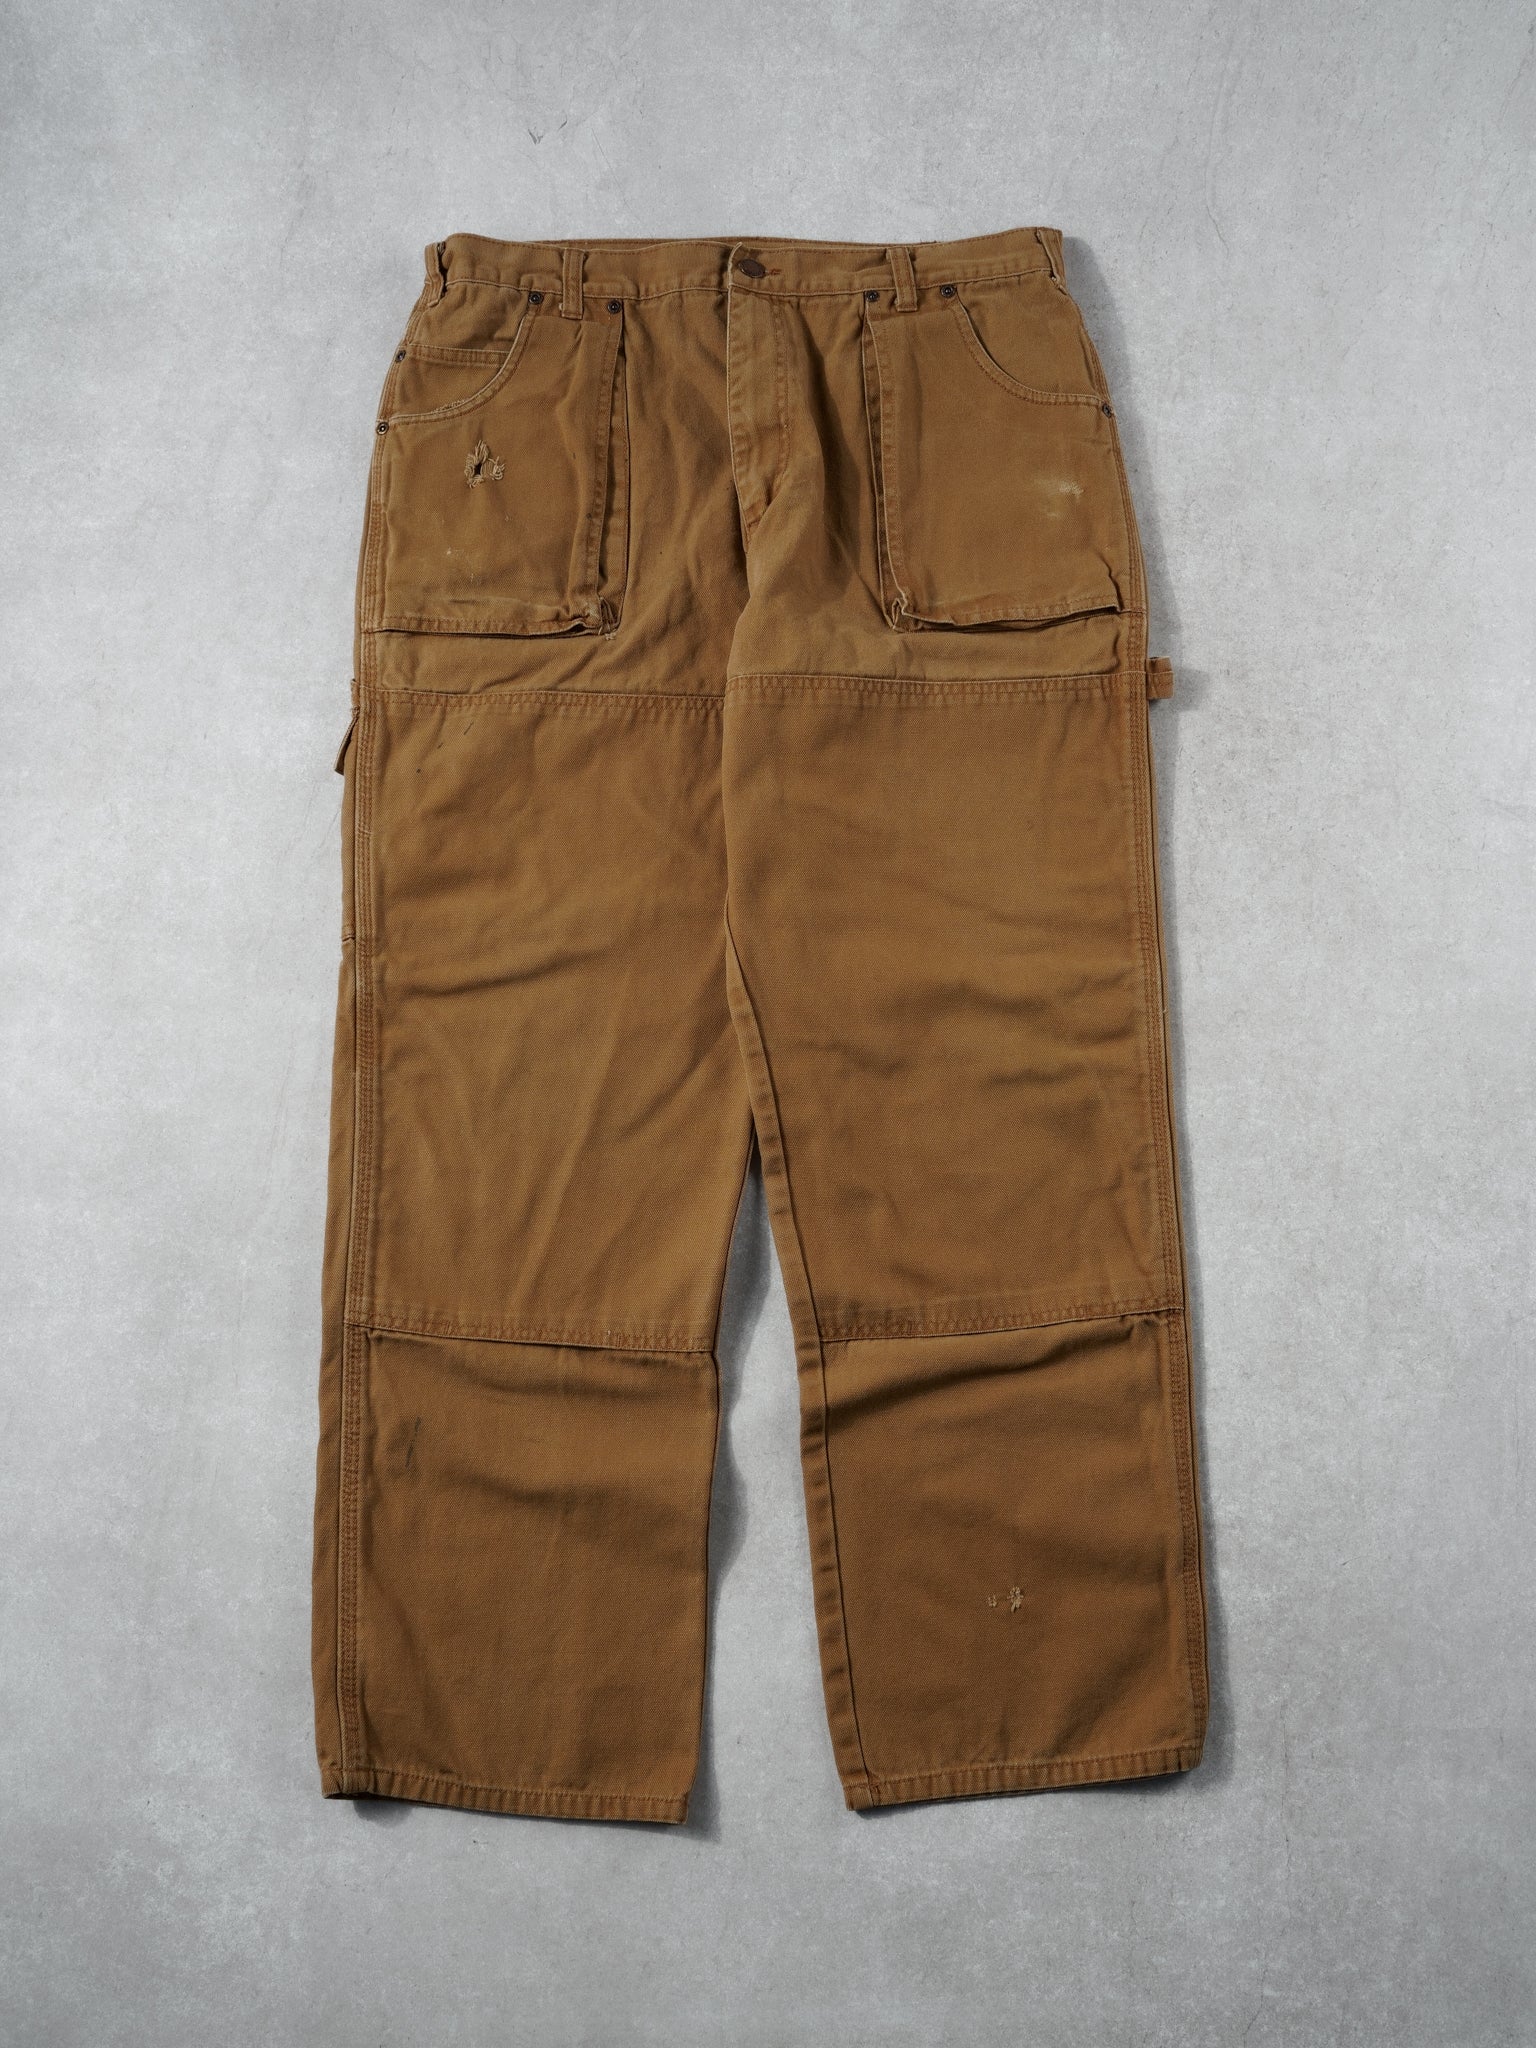 Vintage 90s Khaki Dickies Double Knee Carpenter Pants (34x30)